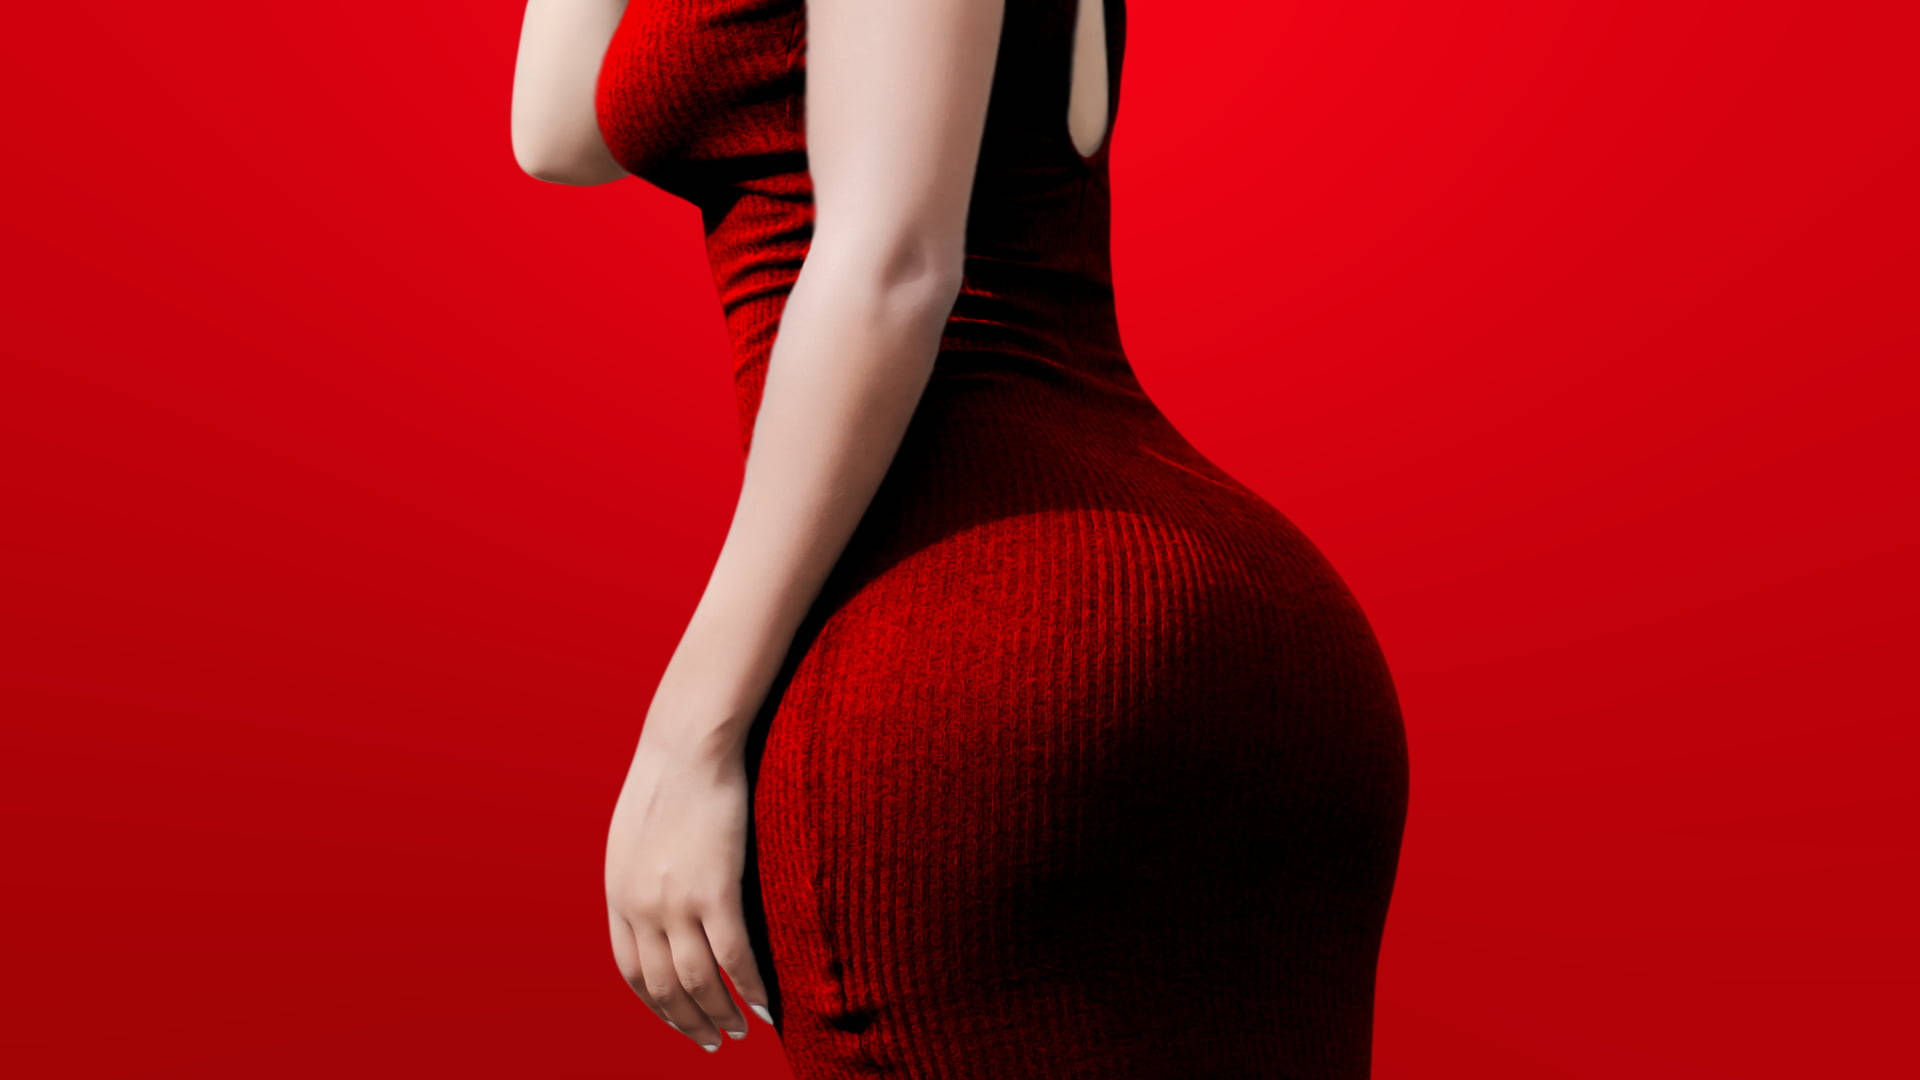 Girl Ass Model In Red Dress Wallpaper